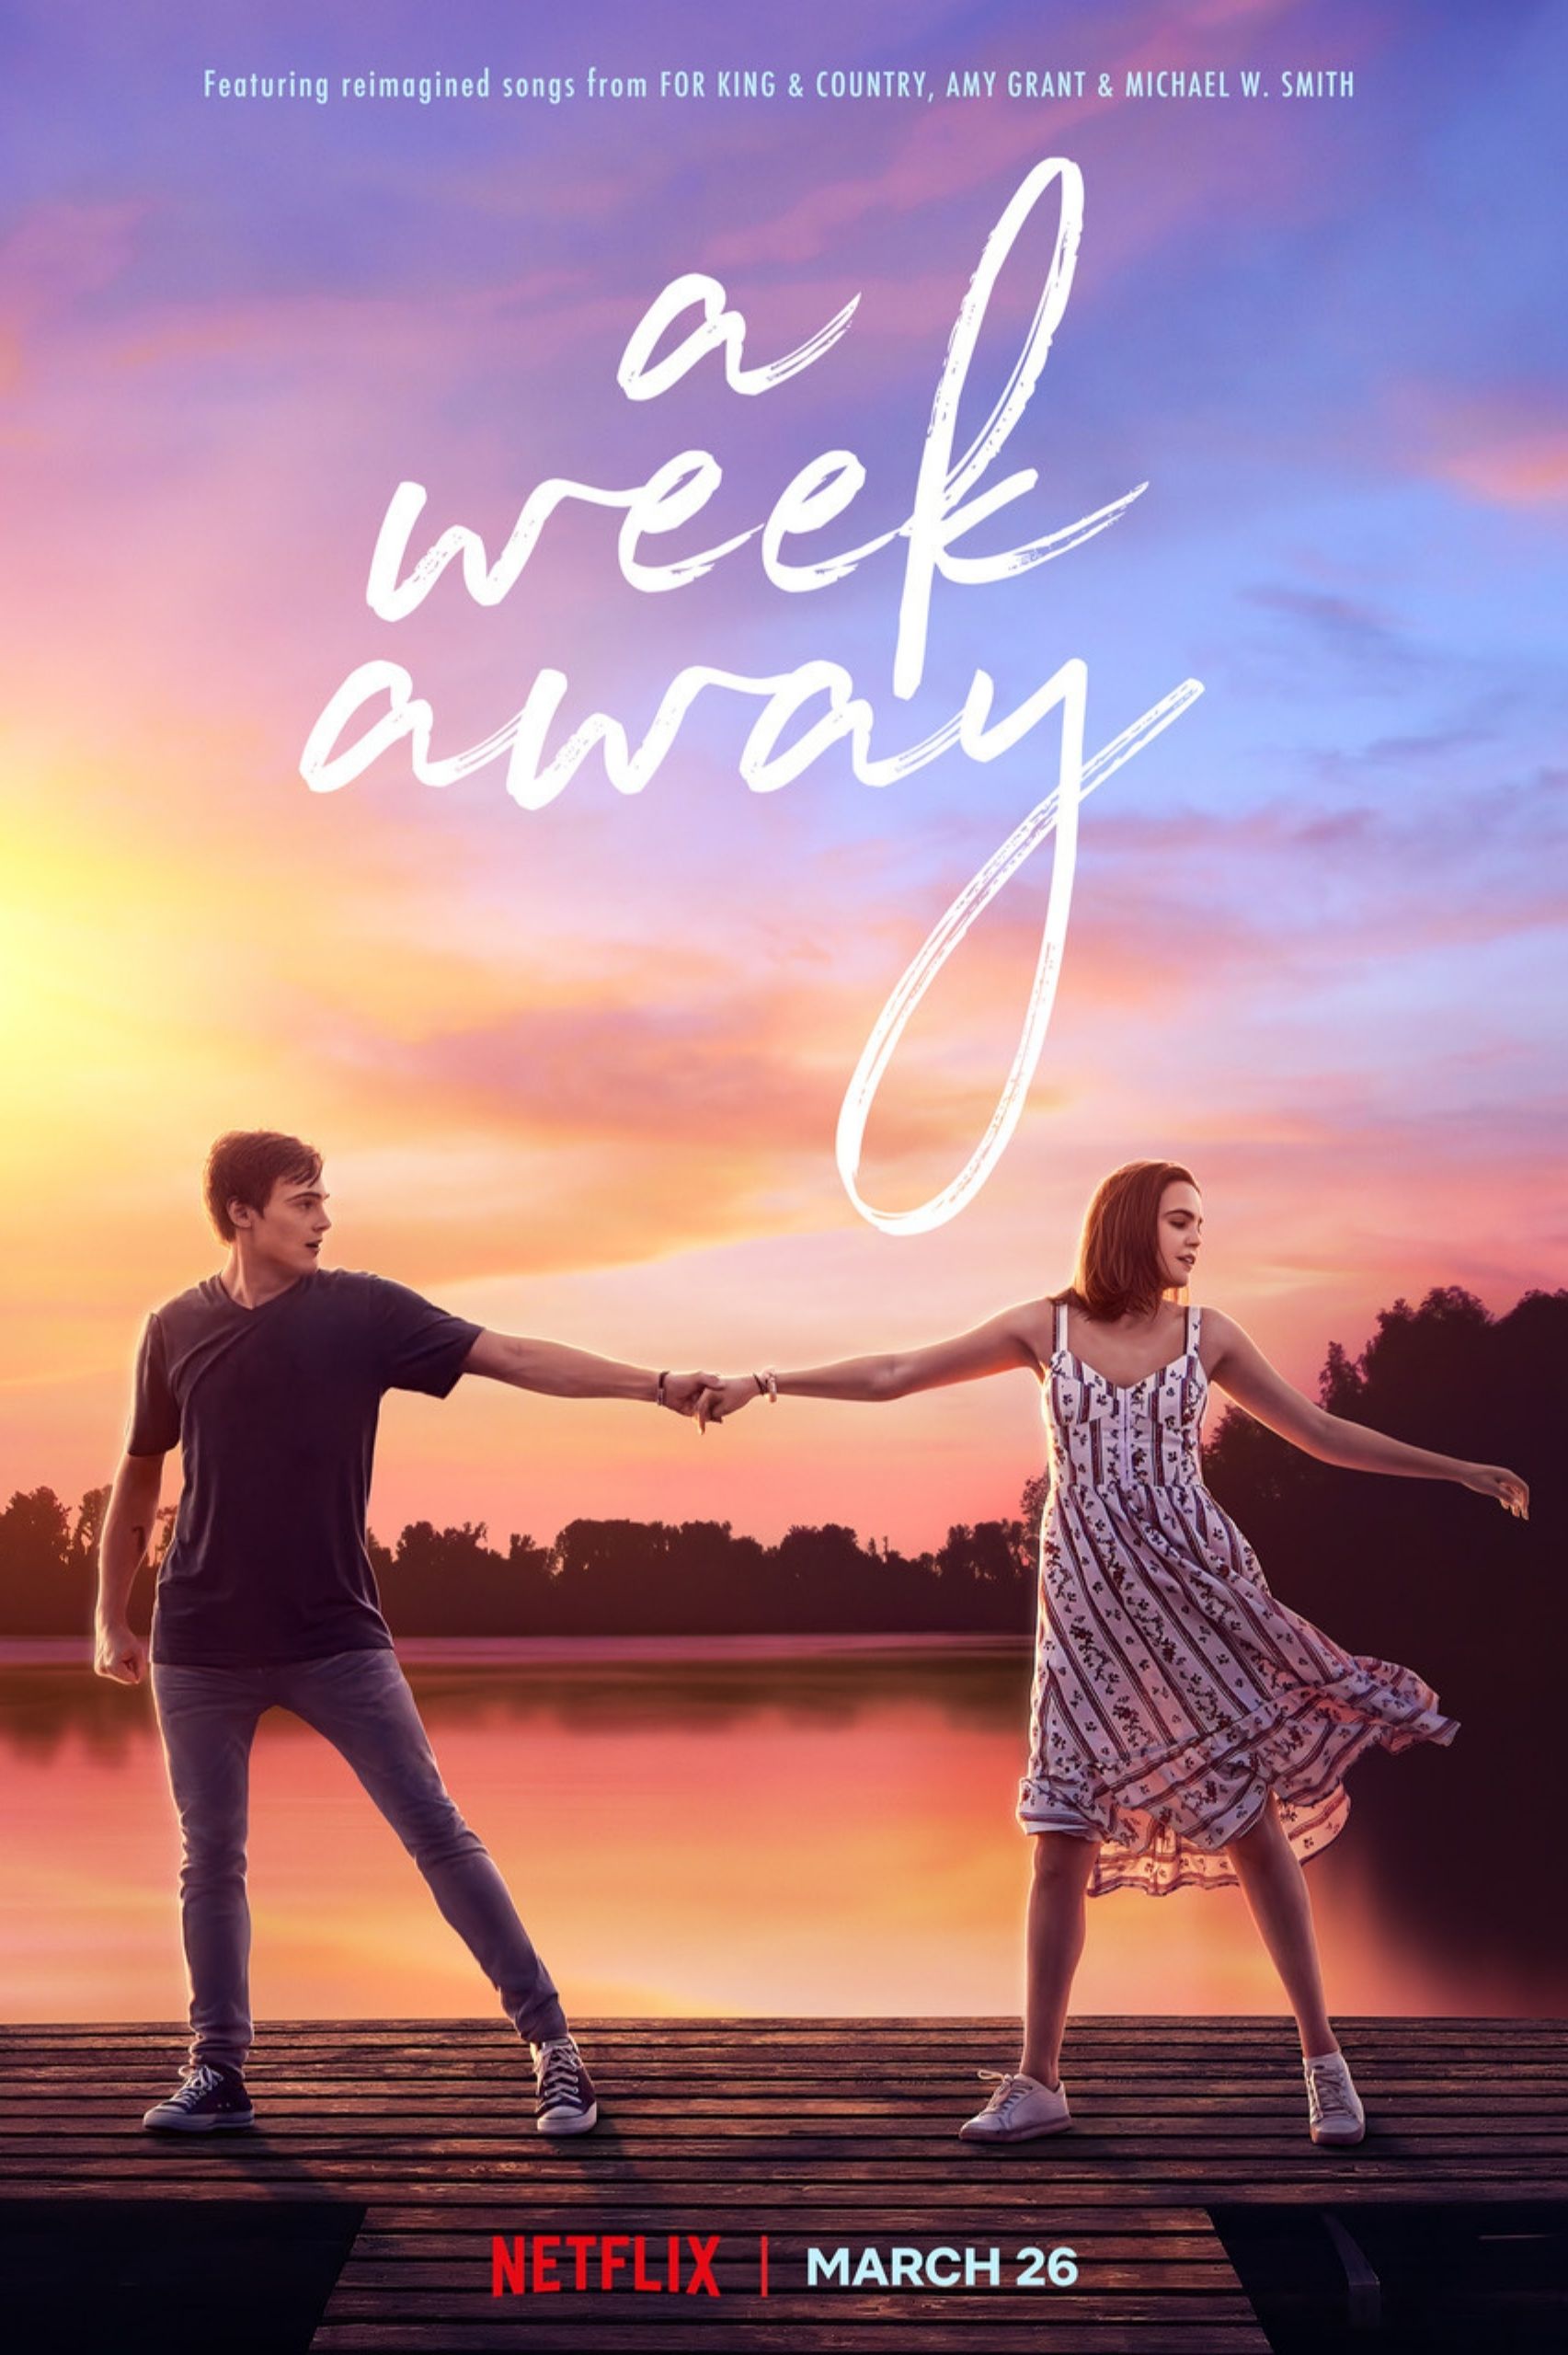 A Week Away - Rita Reviews